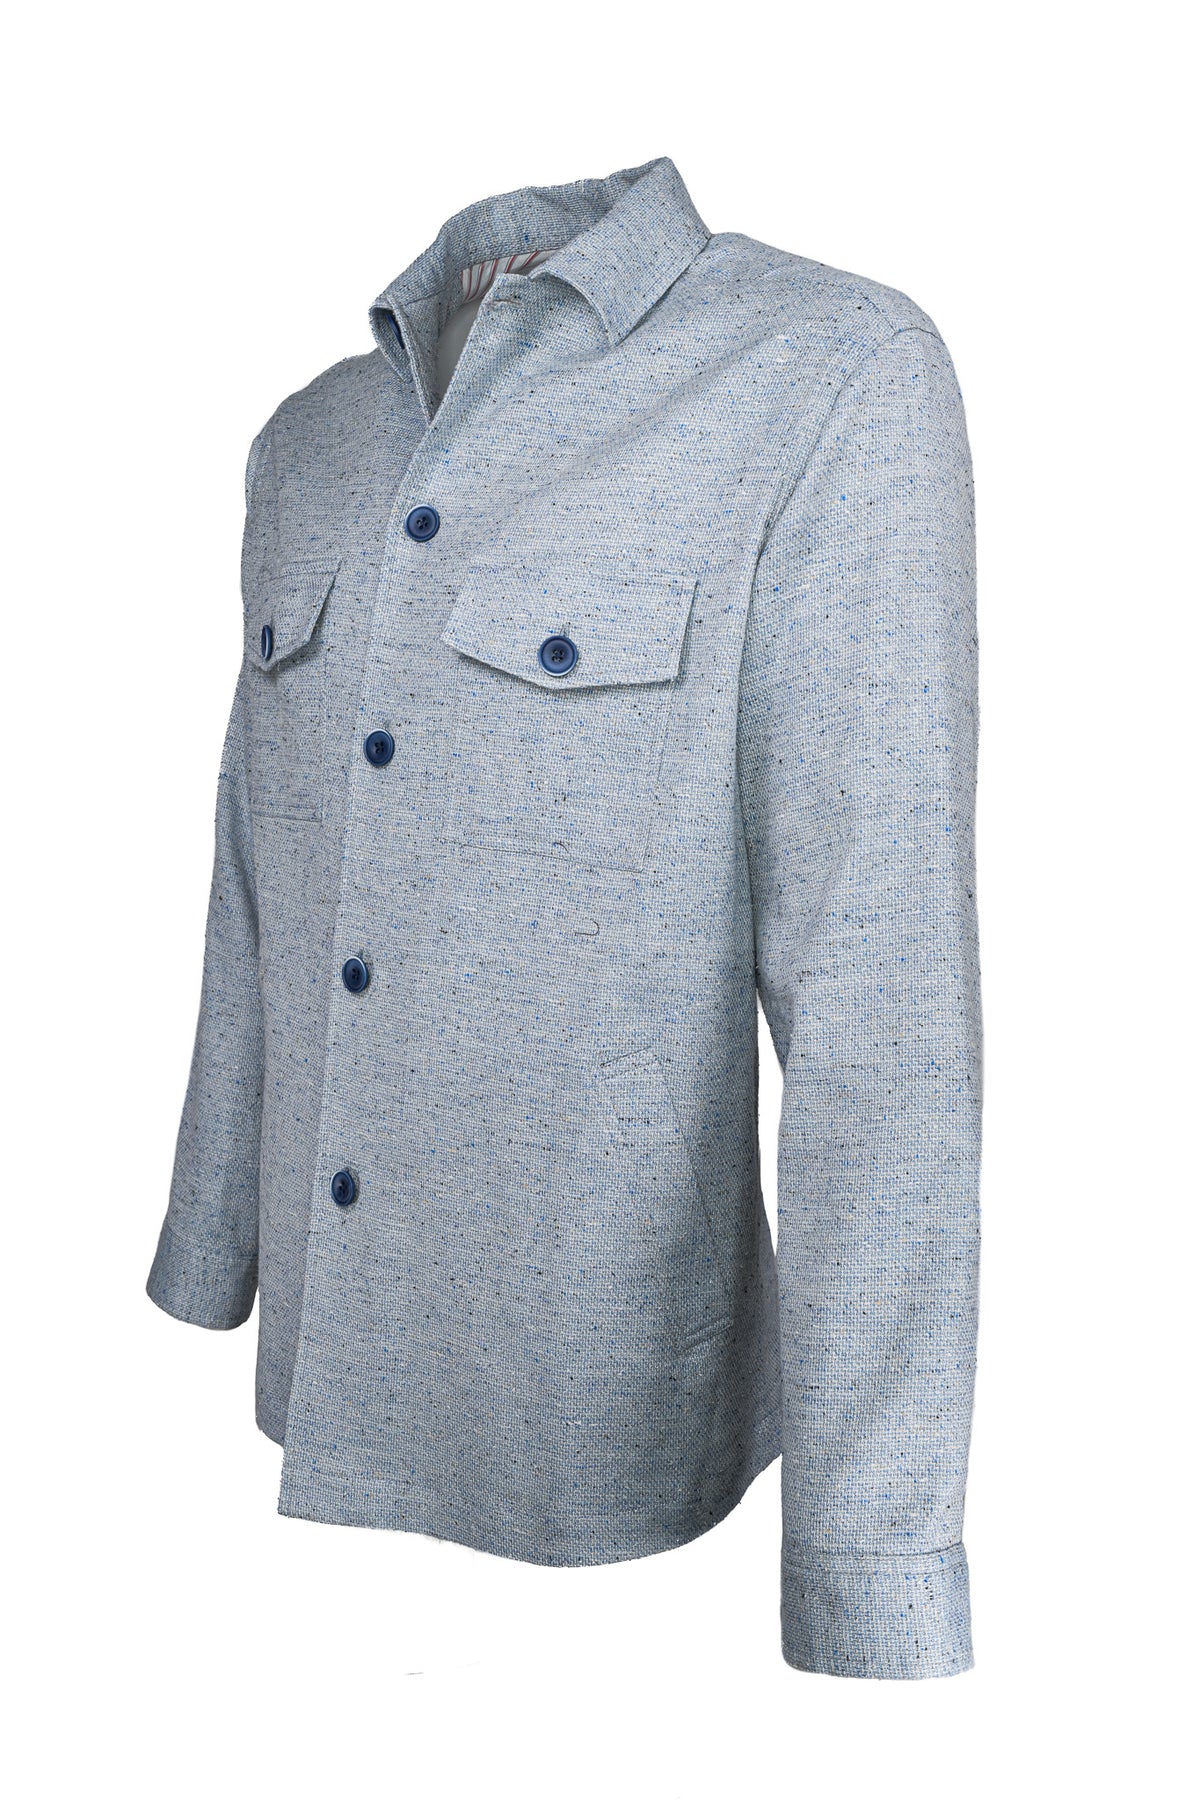 TailoRed Shirt Jacket Blue